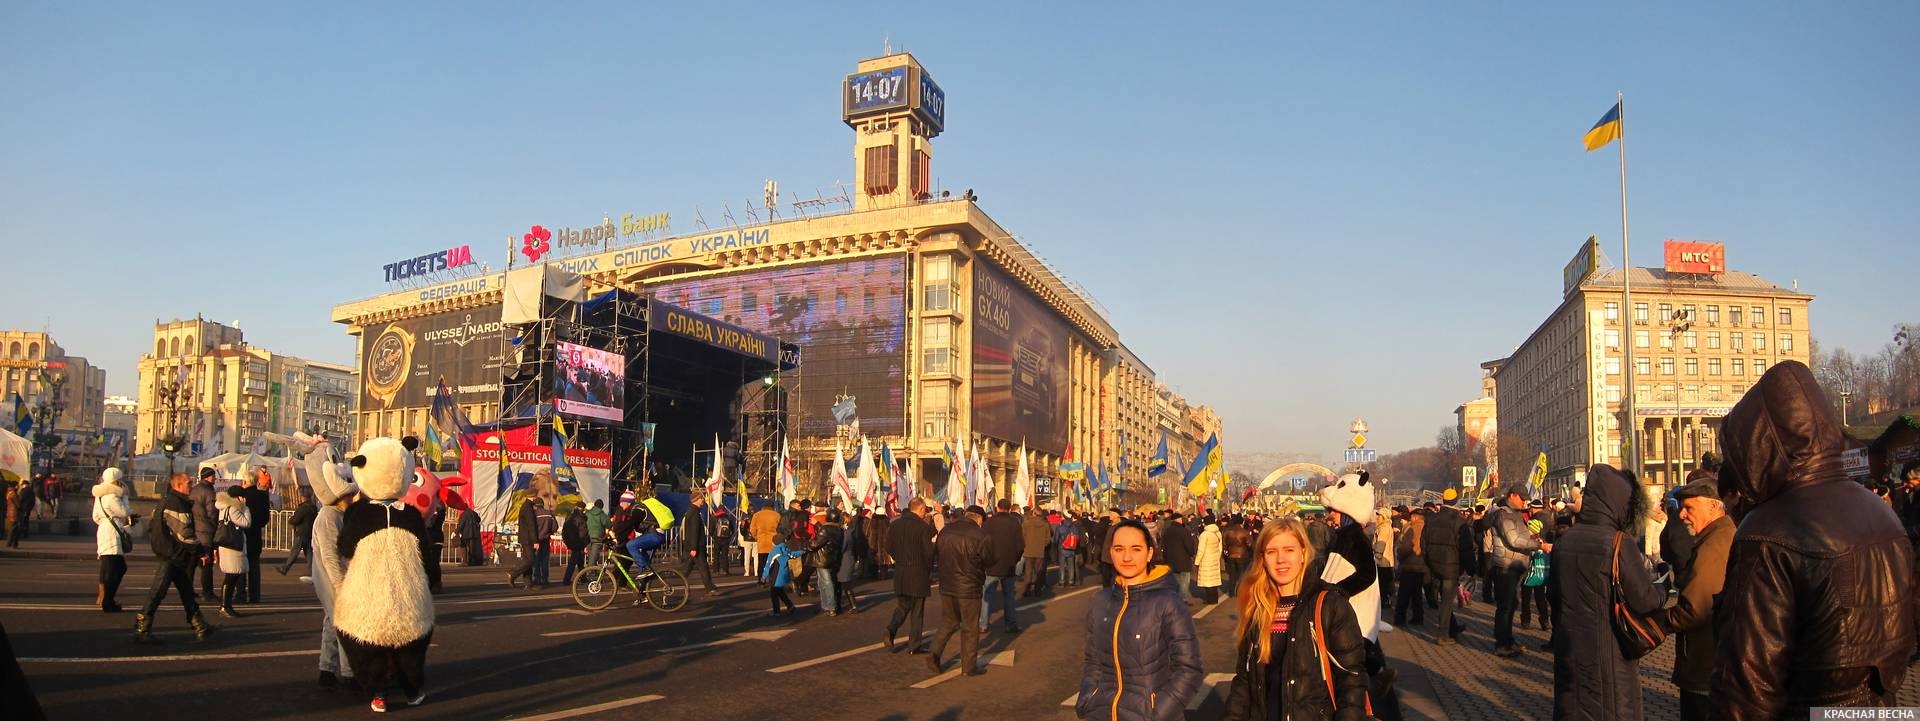 Майдан Независимости. Киев. 29.12.2013